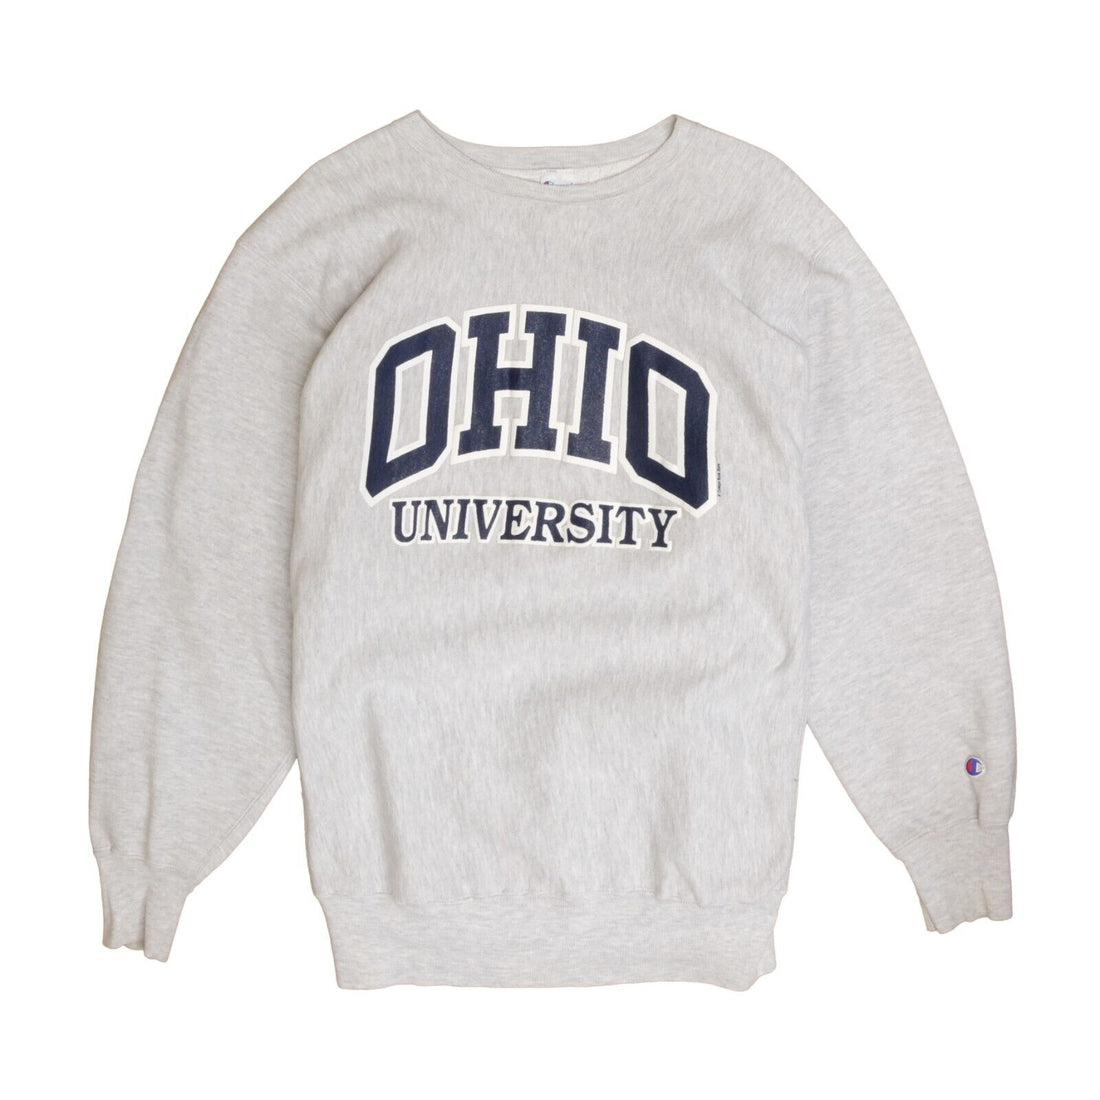 Vintage Ohio University Champion Reverse Weave Sweatshirt Size XL Gray 90s